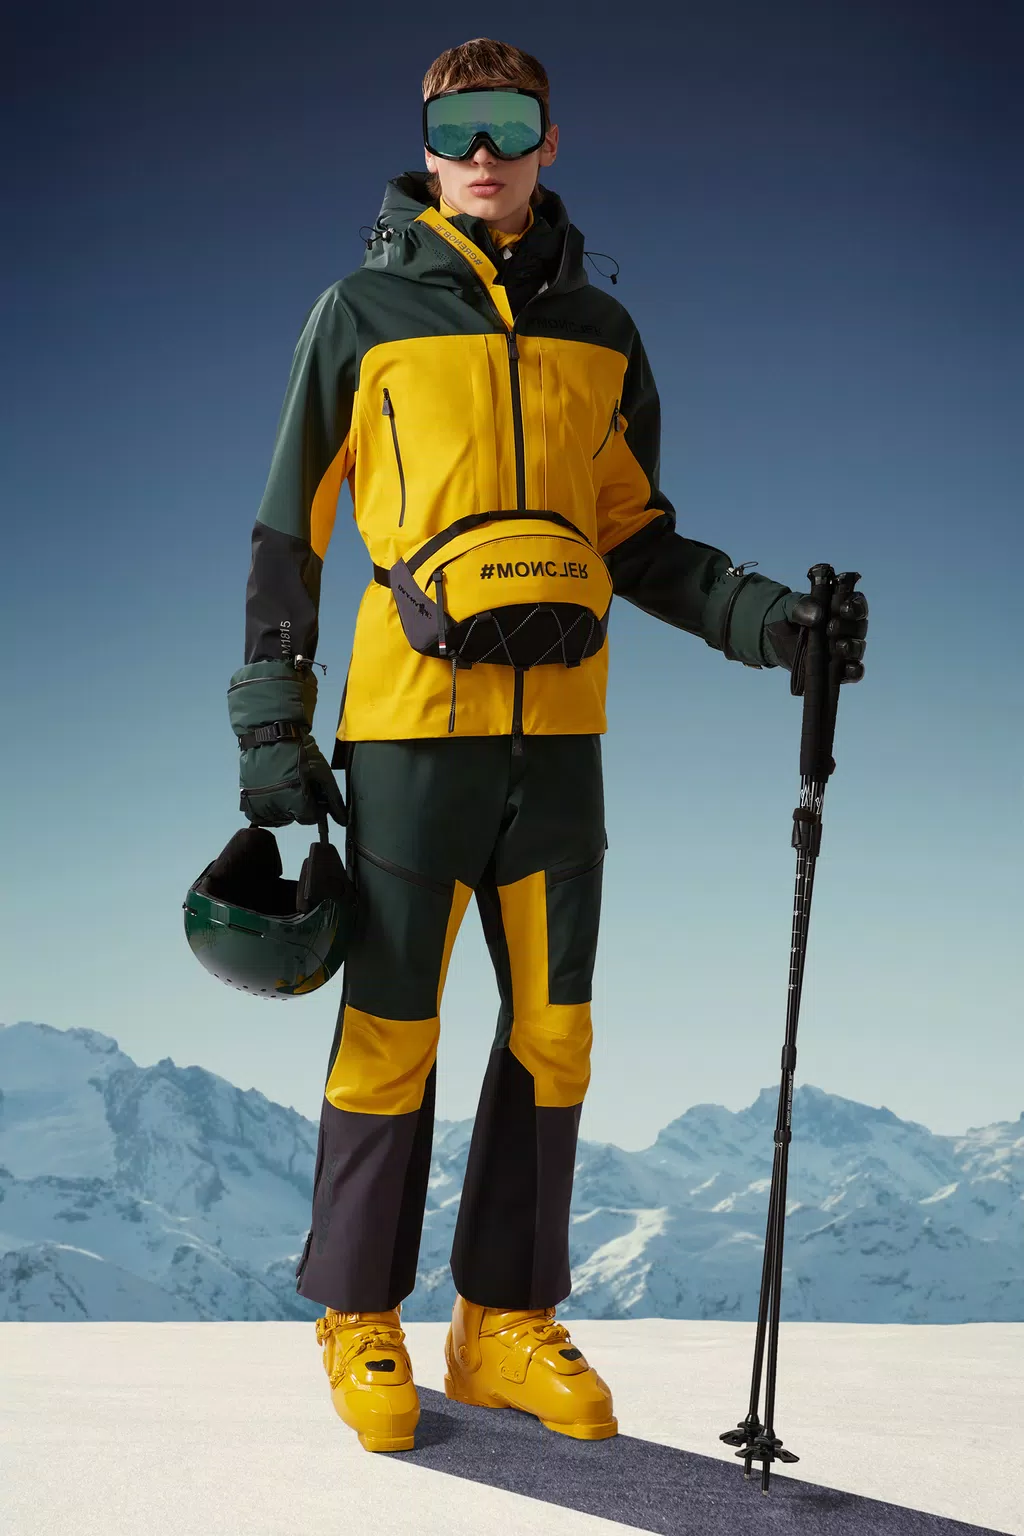 Accessori da sci uomo: cappelli da montagna e guanti impermeabili